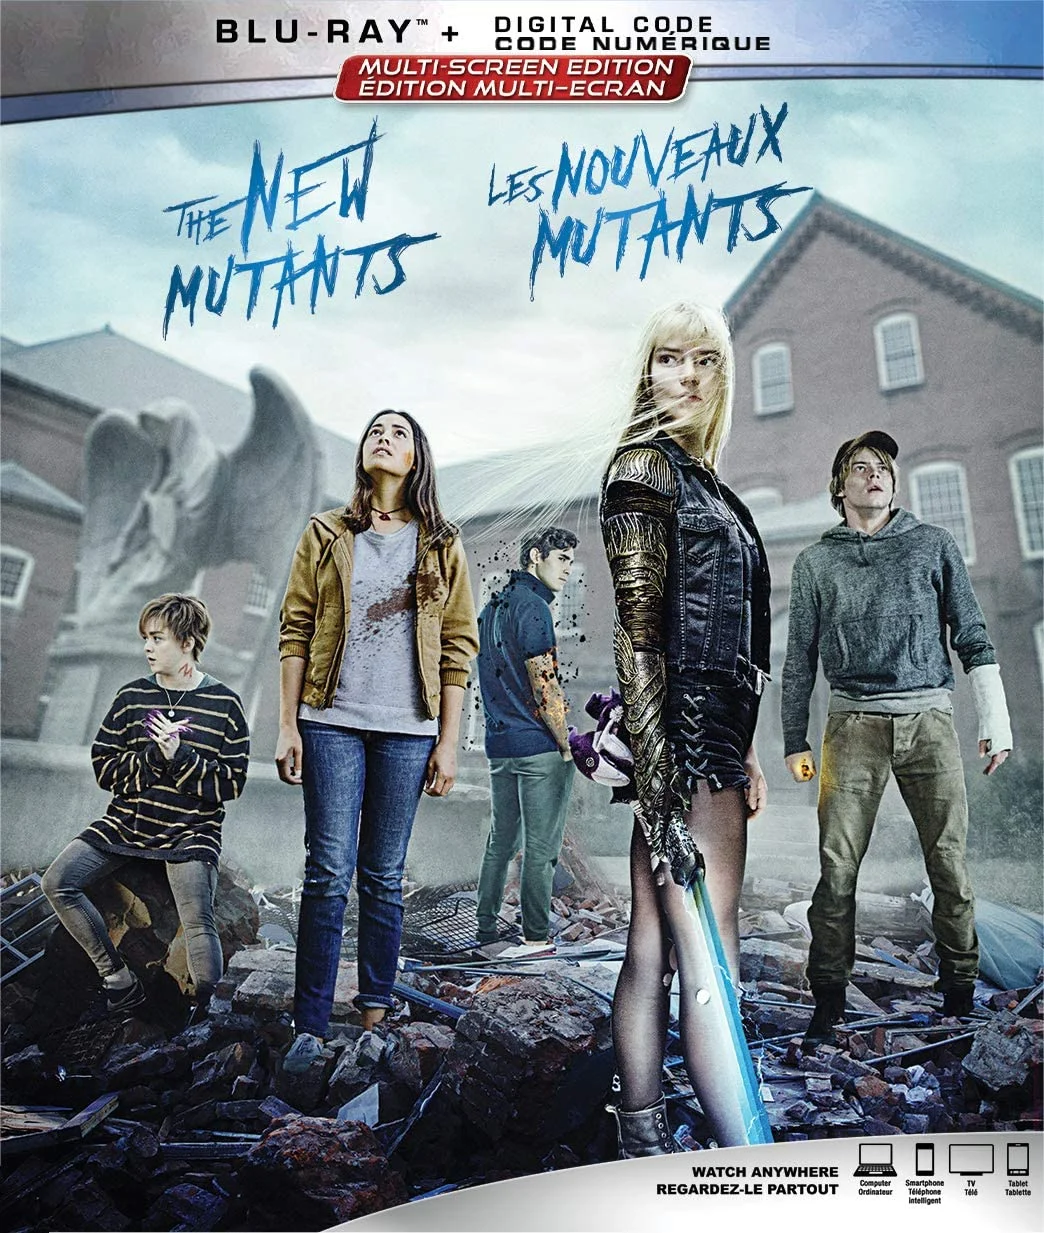 New Mutants, The (Blu-ray) on MovieShack